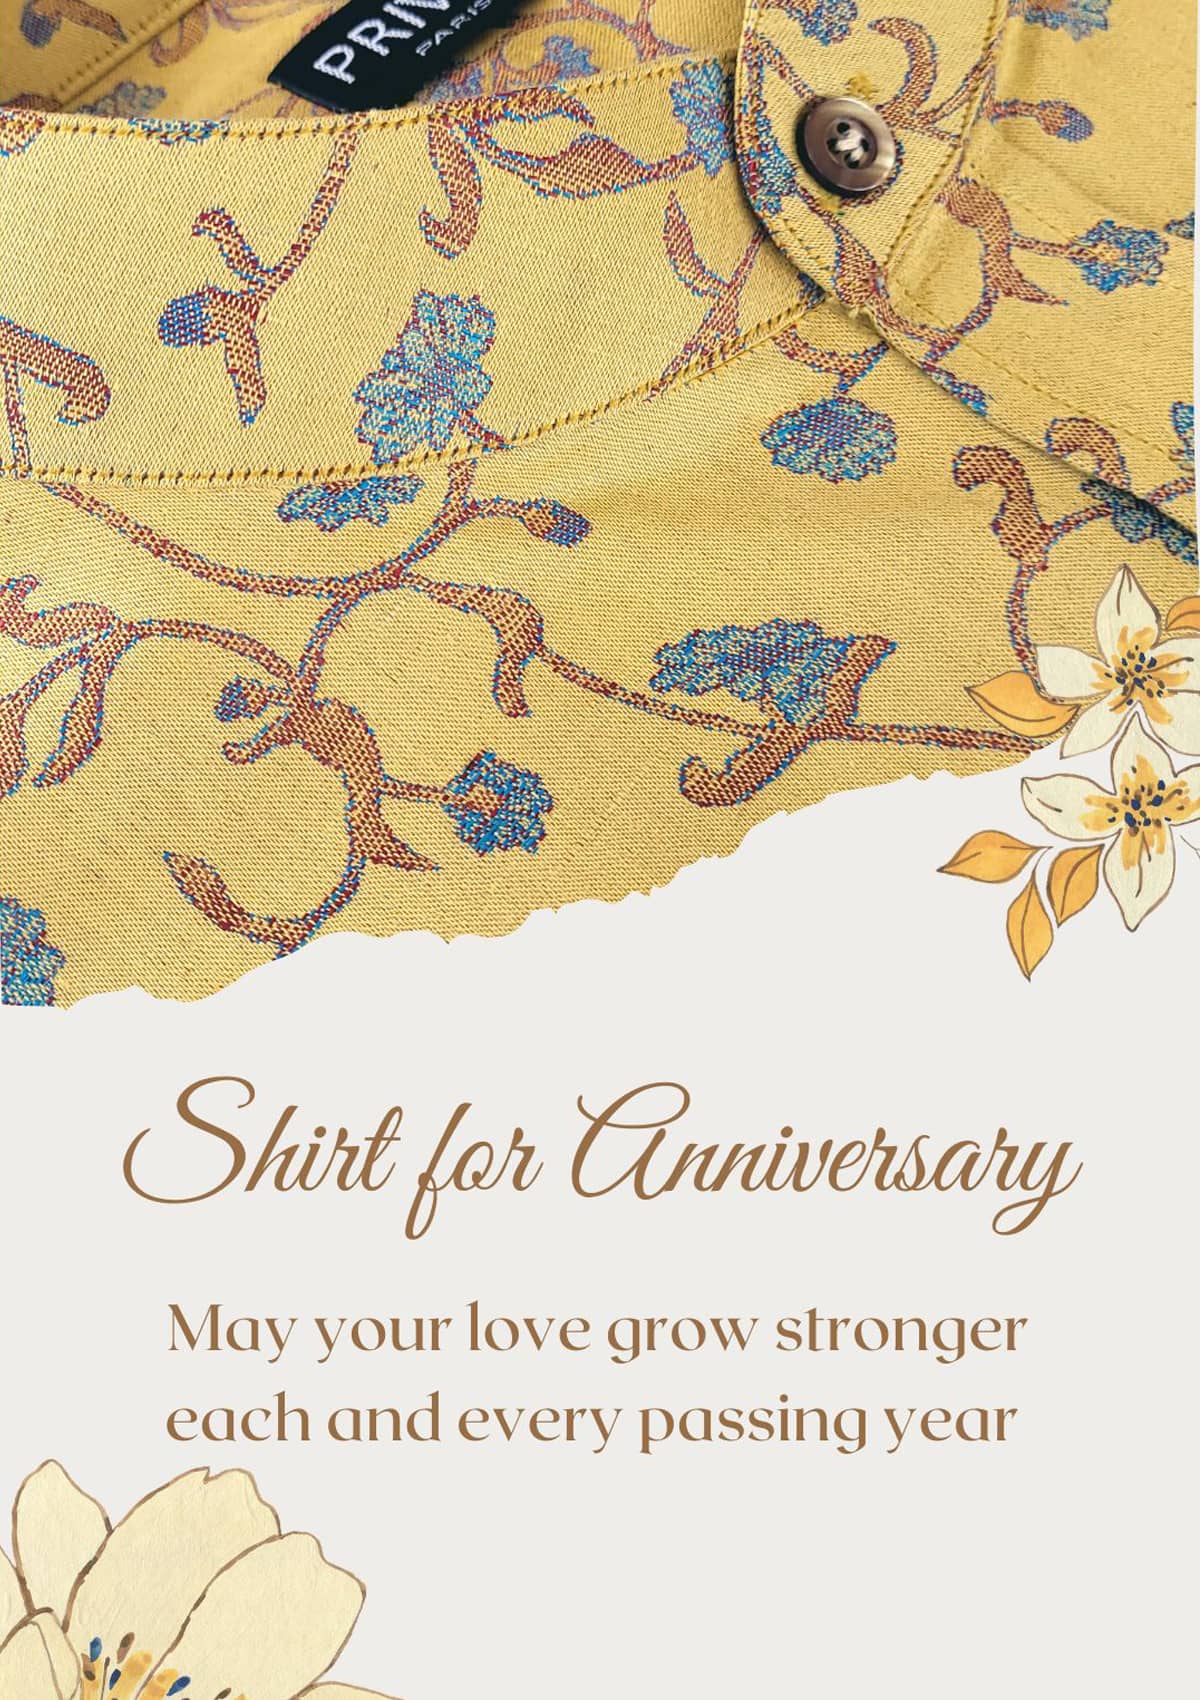 Royal Yellow Linen Luxury Shirt (Anniversary Edition)